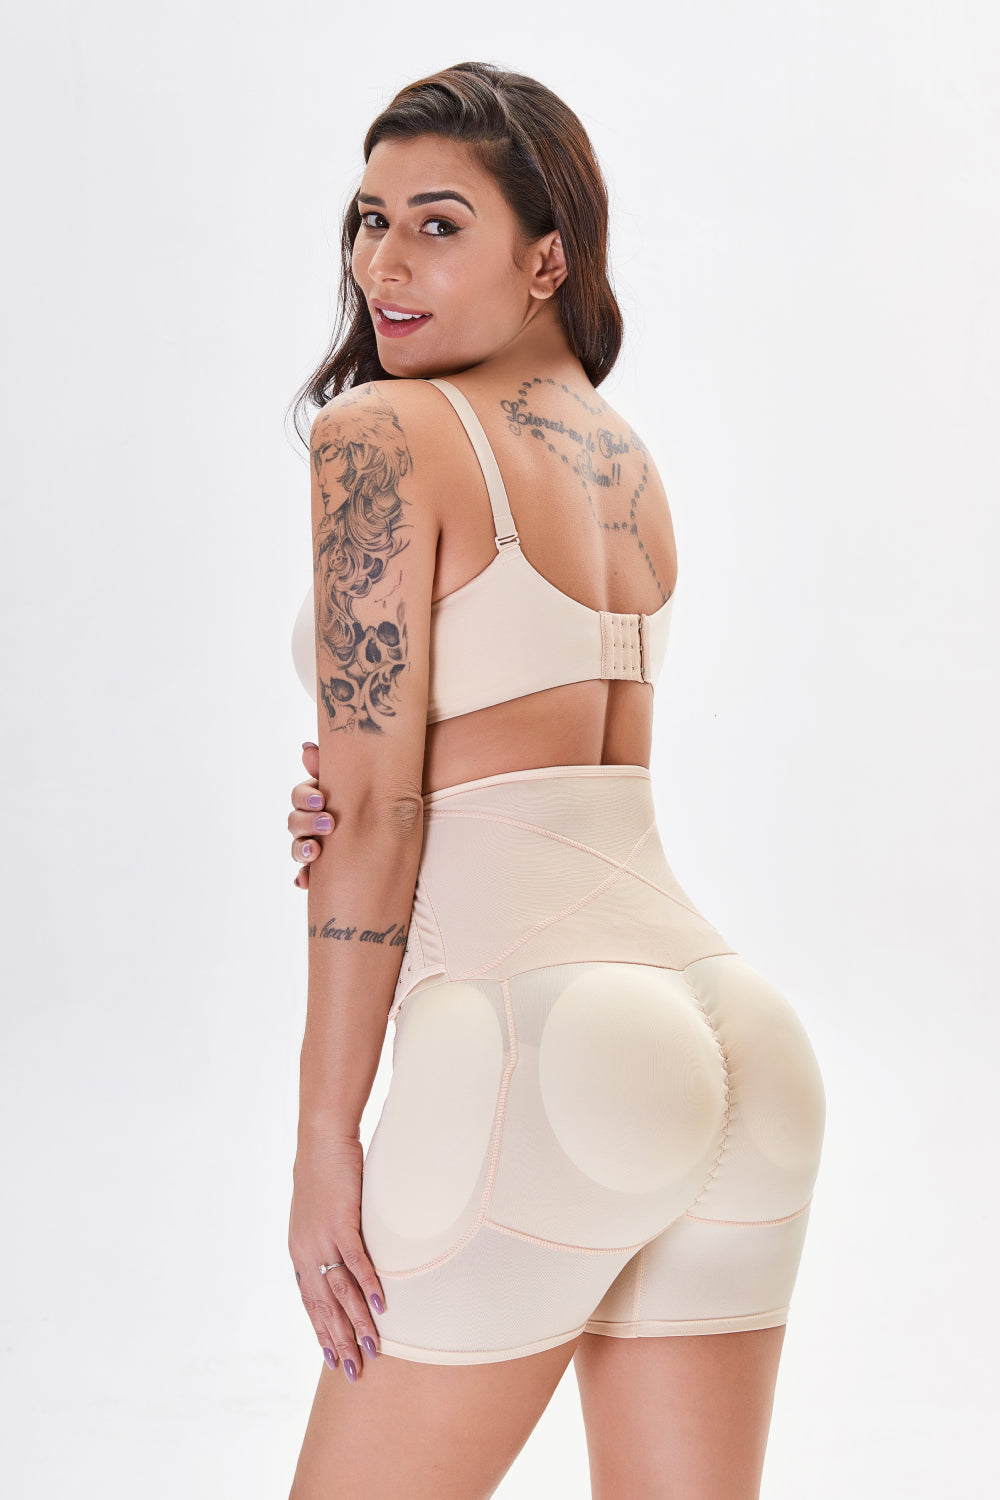 Full Size Hip Lifting Shaping Shorts - Shopiebay